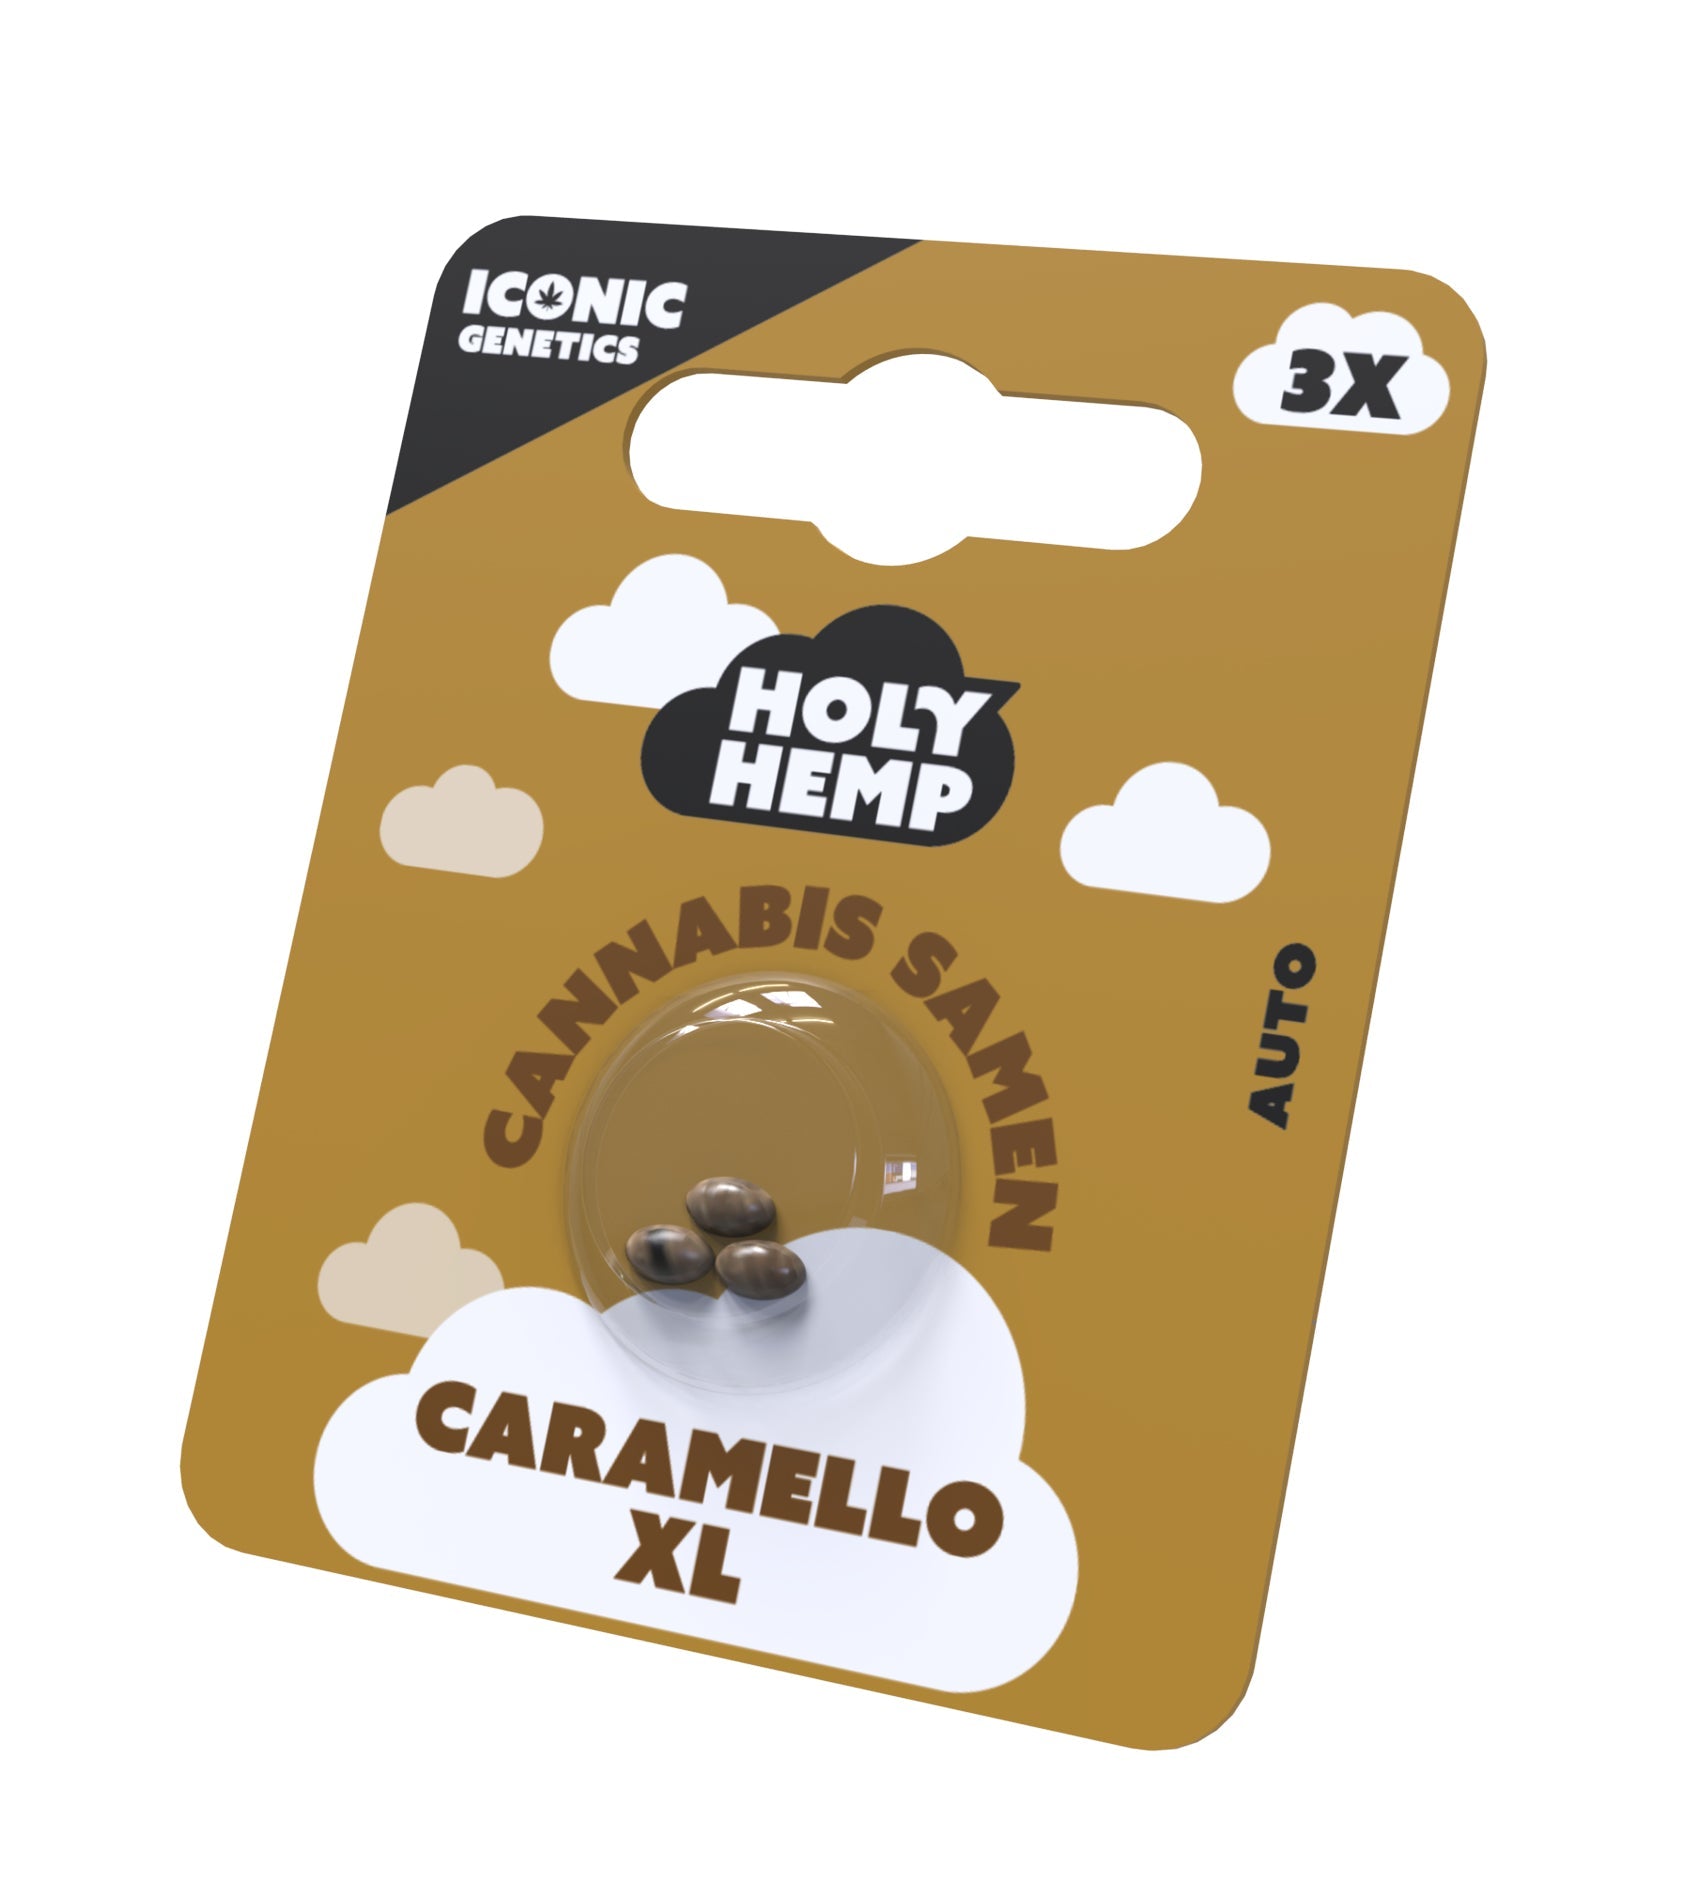 Caramello XL Cannabissamen - Iconic Seeds Holy Hemp